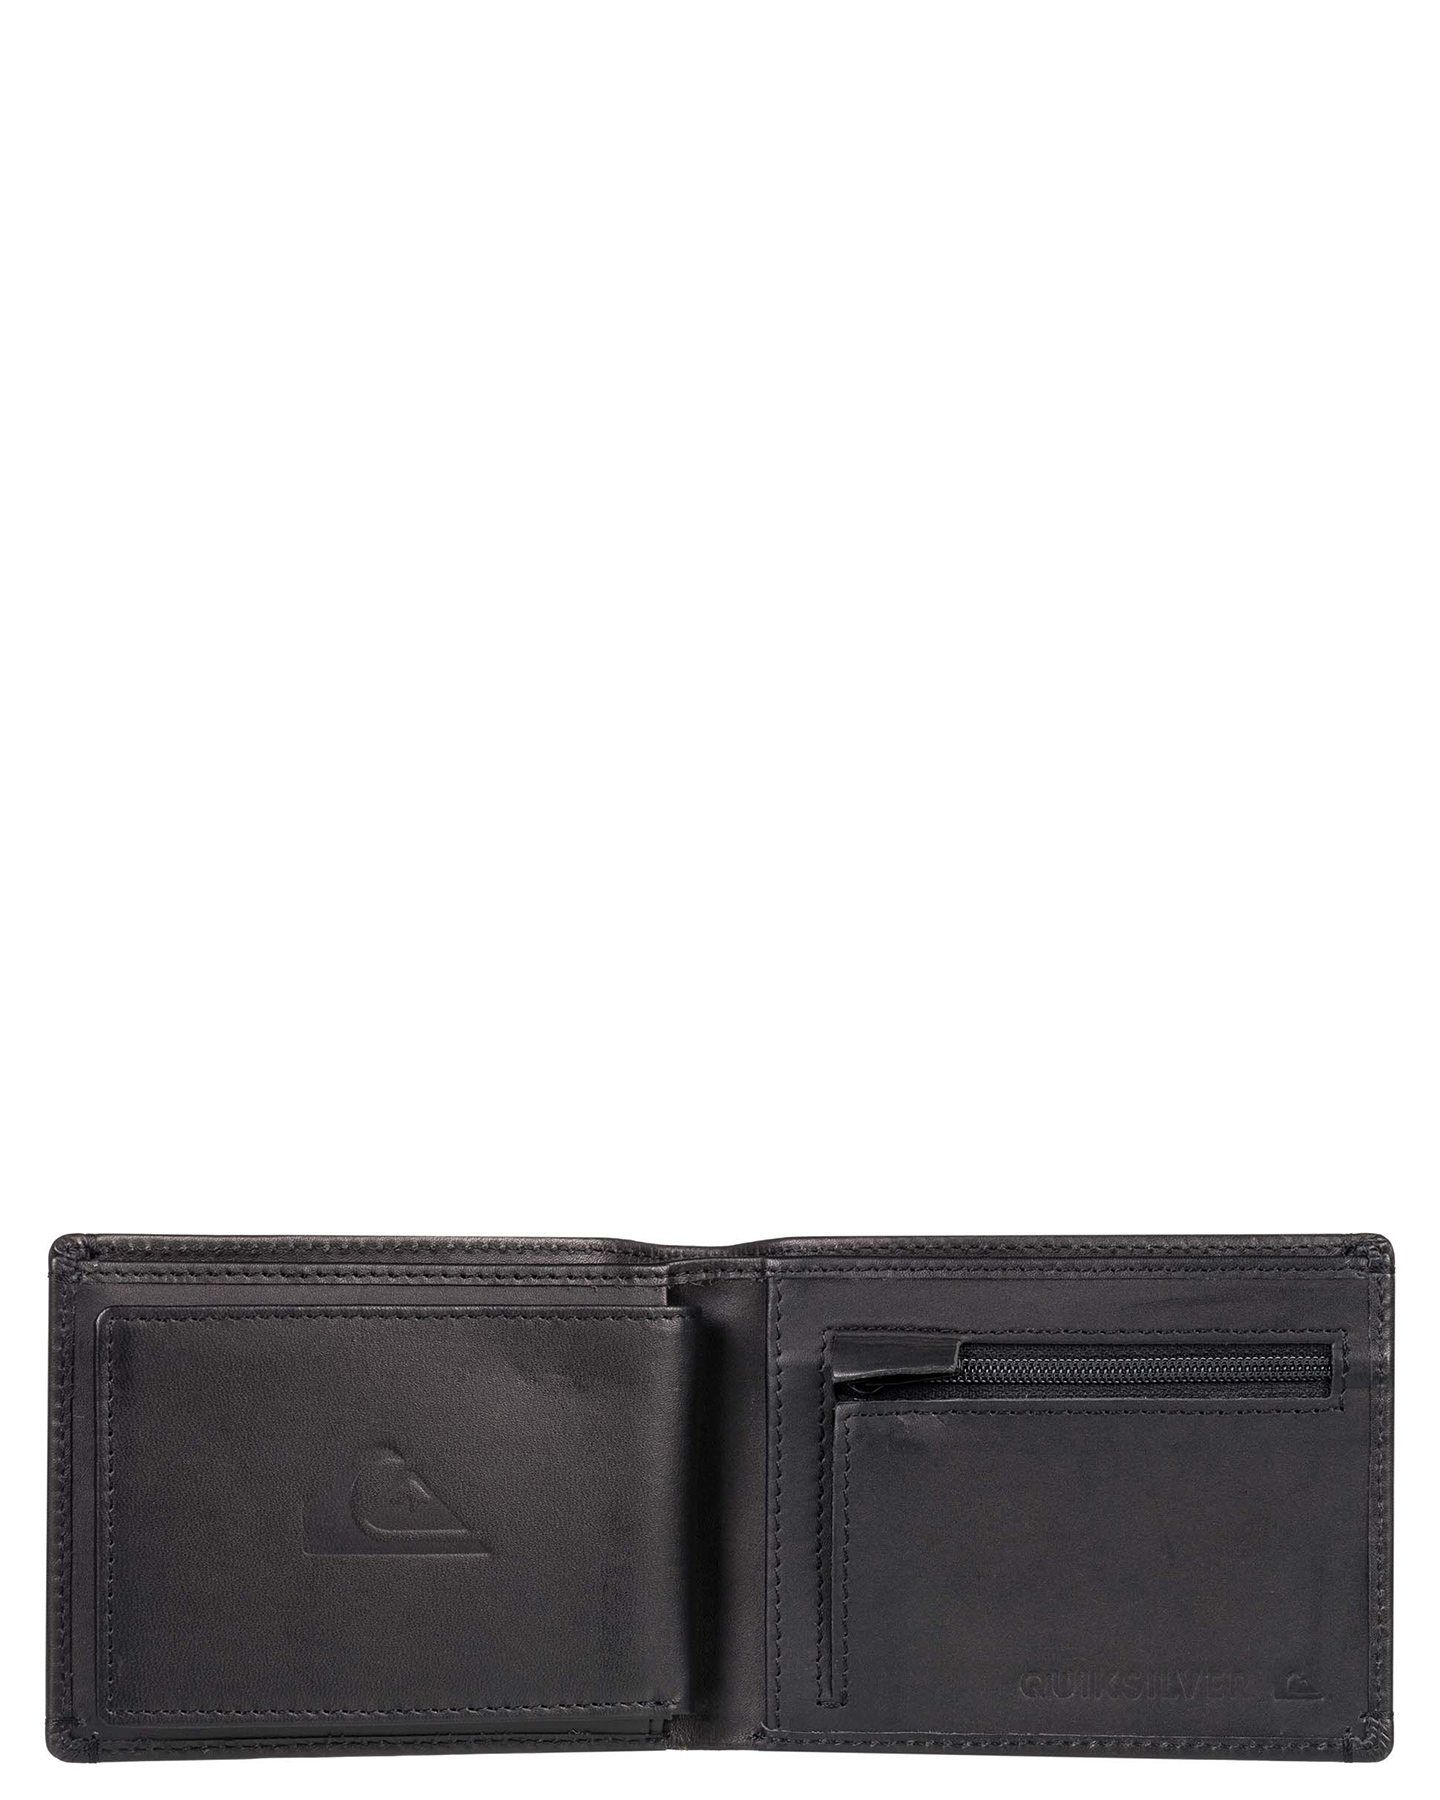 Quiksilver New Miss Dollar - Leather Bi-Fold Wallet - Black | SurfStitch